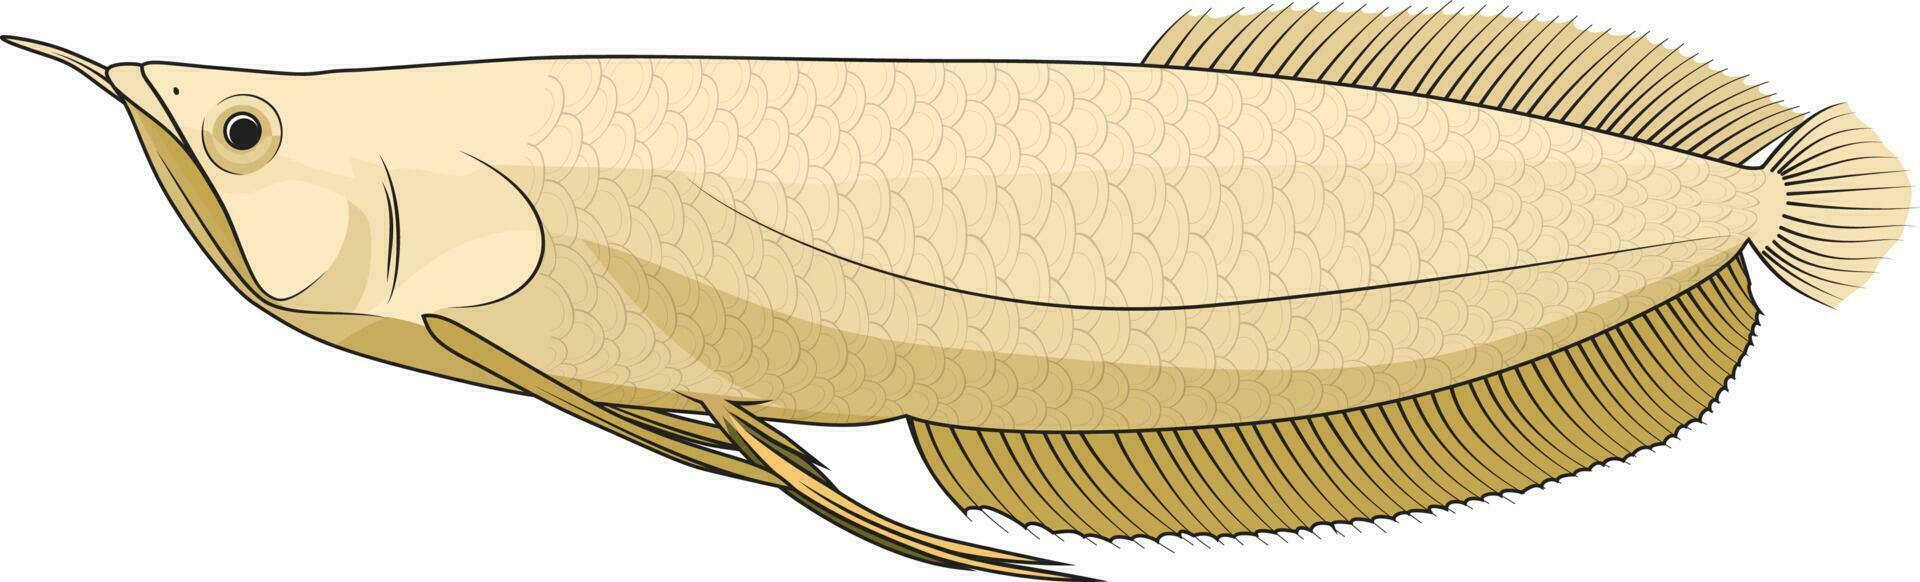 Silver Arowana fish vector illustration Osteoglossum bicirrhosum predator fish vector image